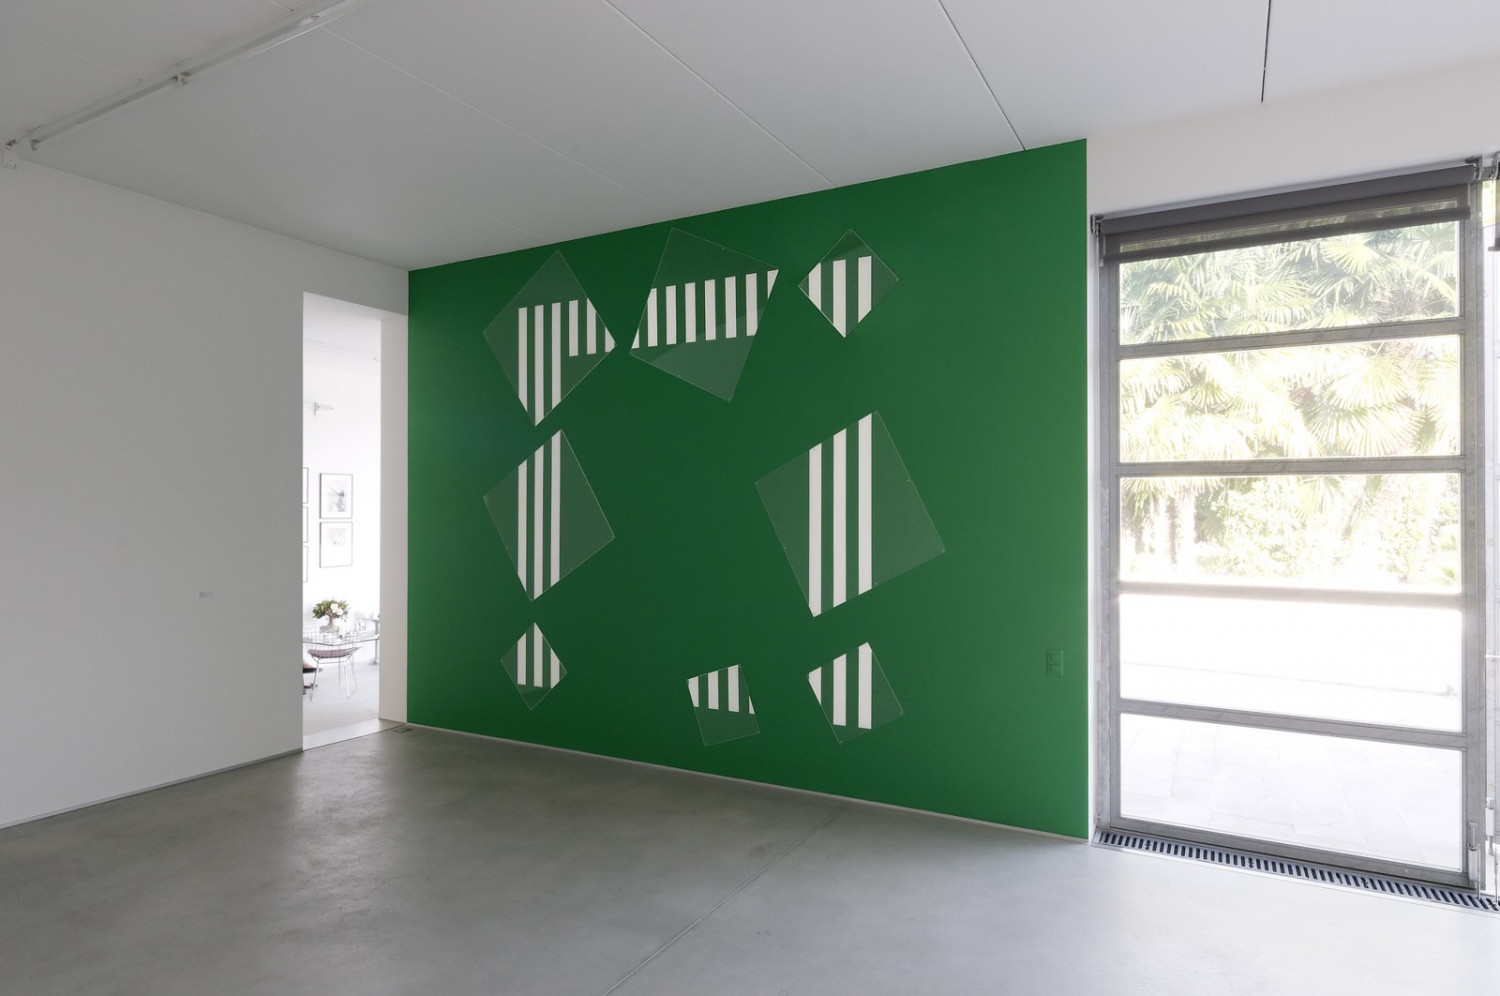 Daniel Buren, ‘Cadre Fragmenté A’, 1991, 8 elements in plexiglas, white stripes, on green wall